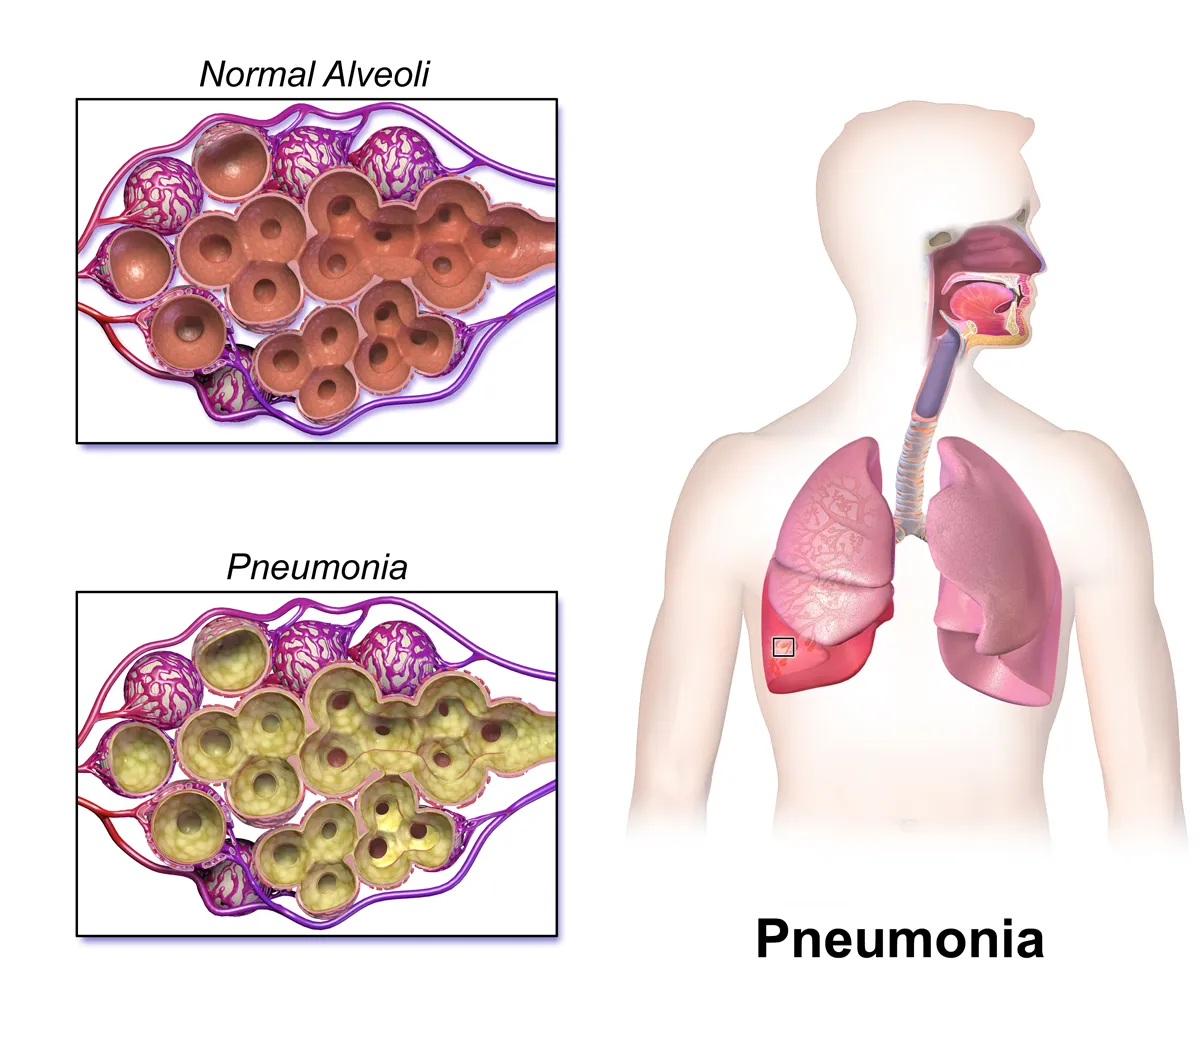 https://commons.wikimedia.org/wiki/File:Blausen_0994_Pneumonia